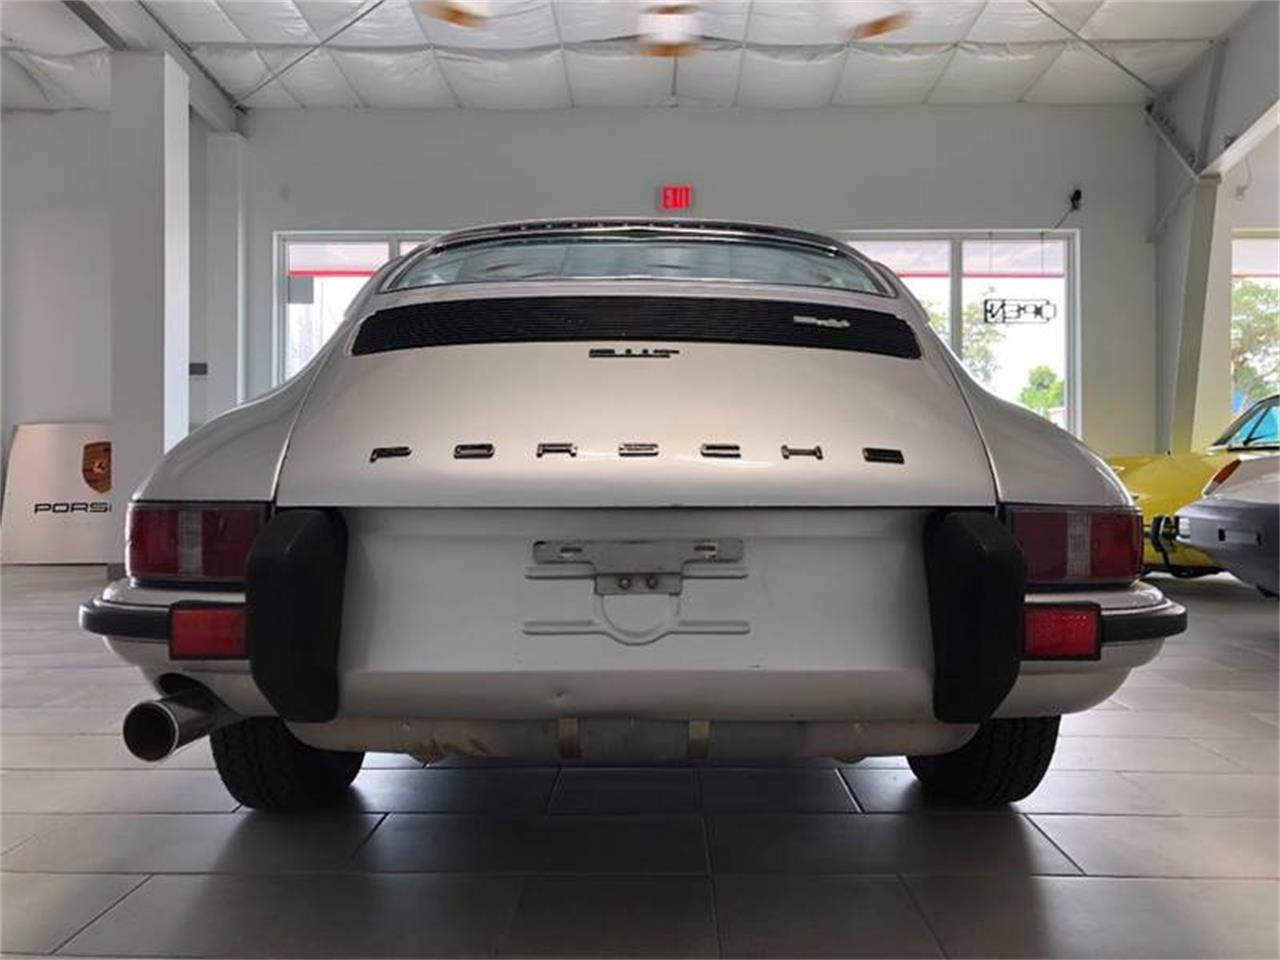 1973 Porsche 911 for sale in Naples, FL – photo 9